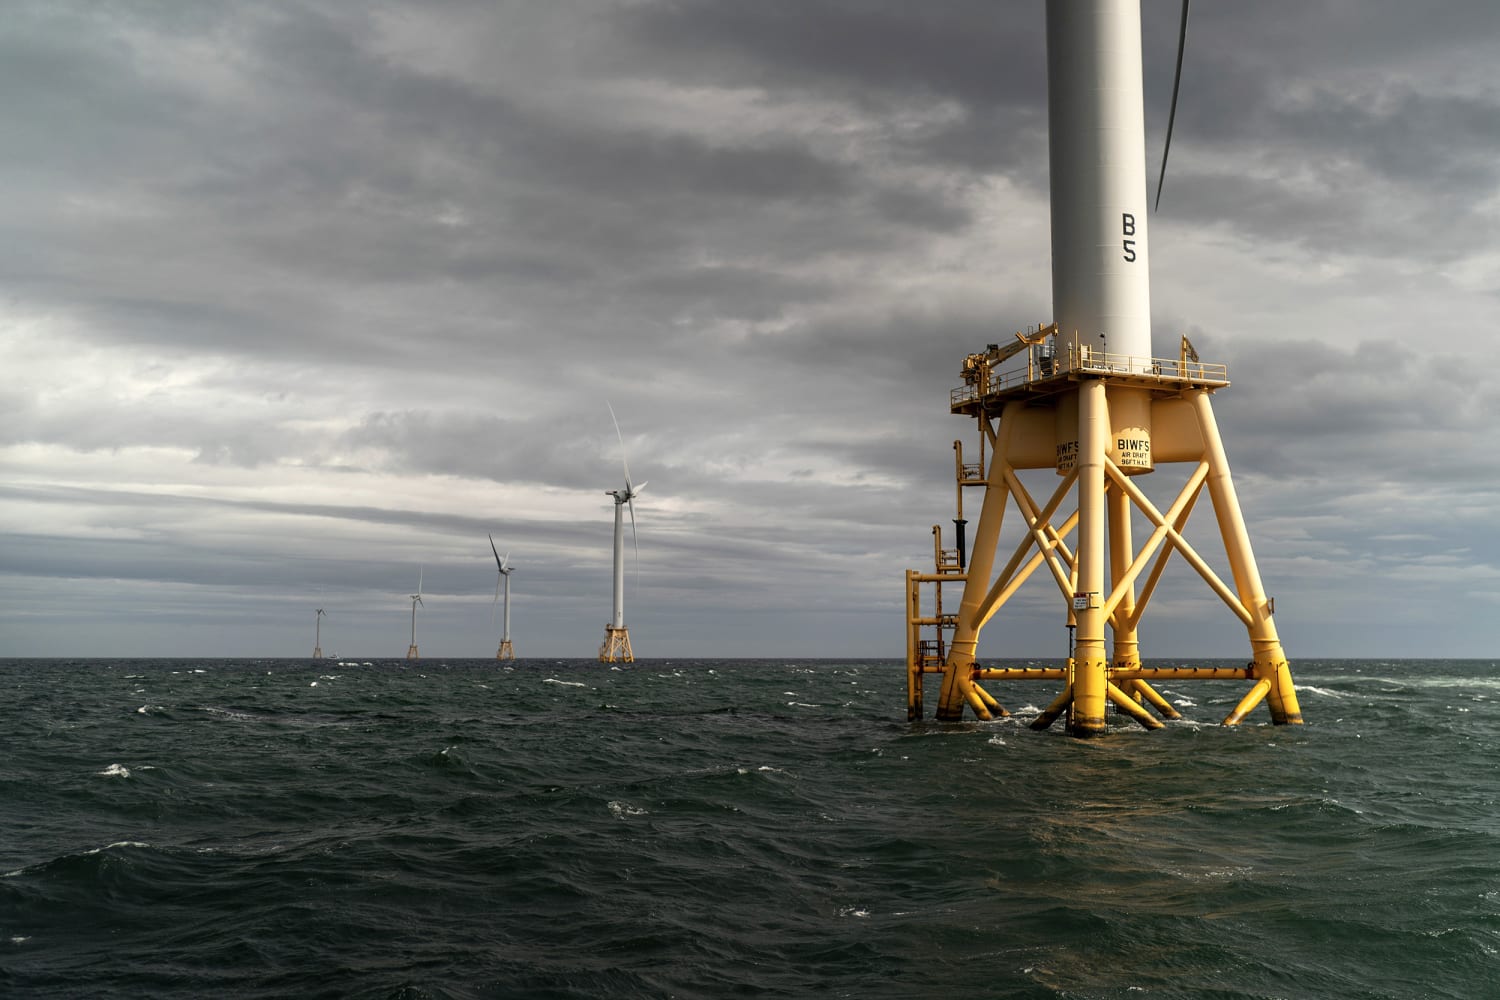 Sale jumpstarts floating, offshore wind power in U.S. waters